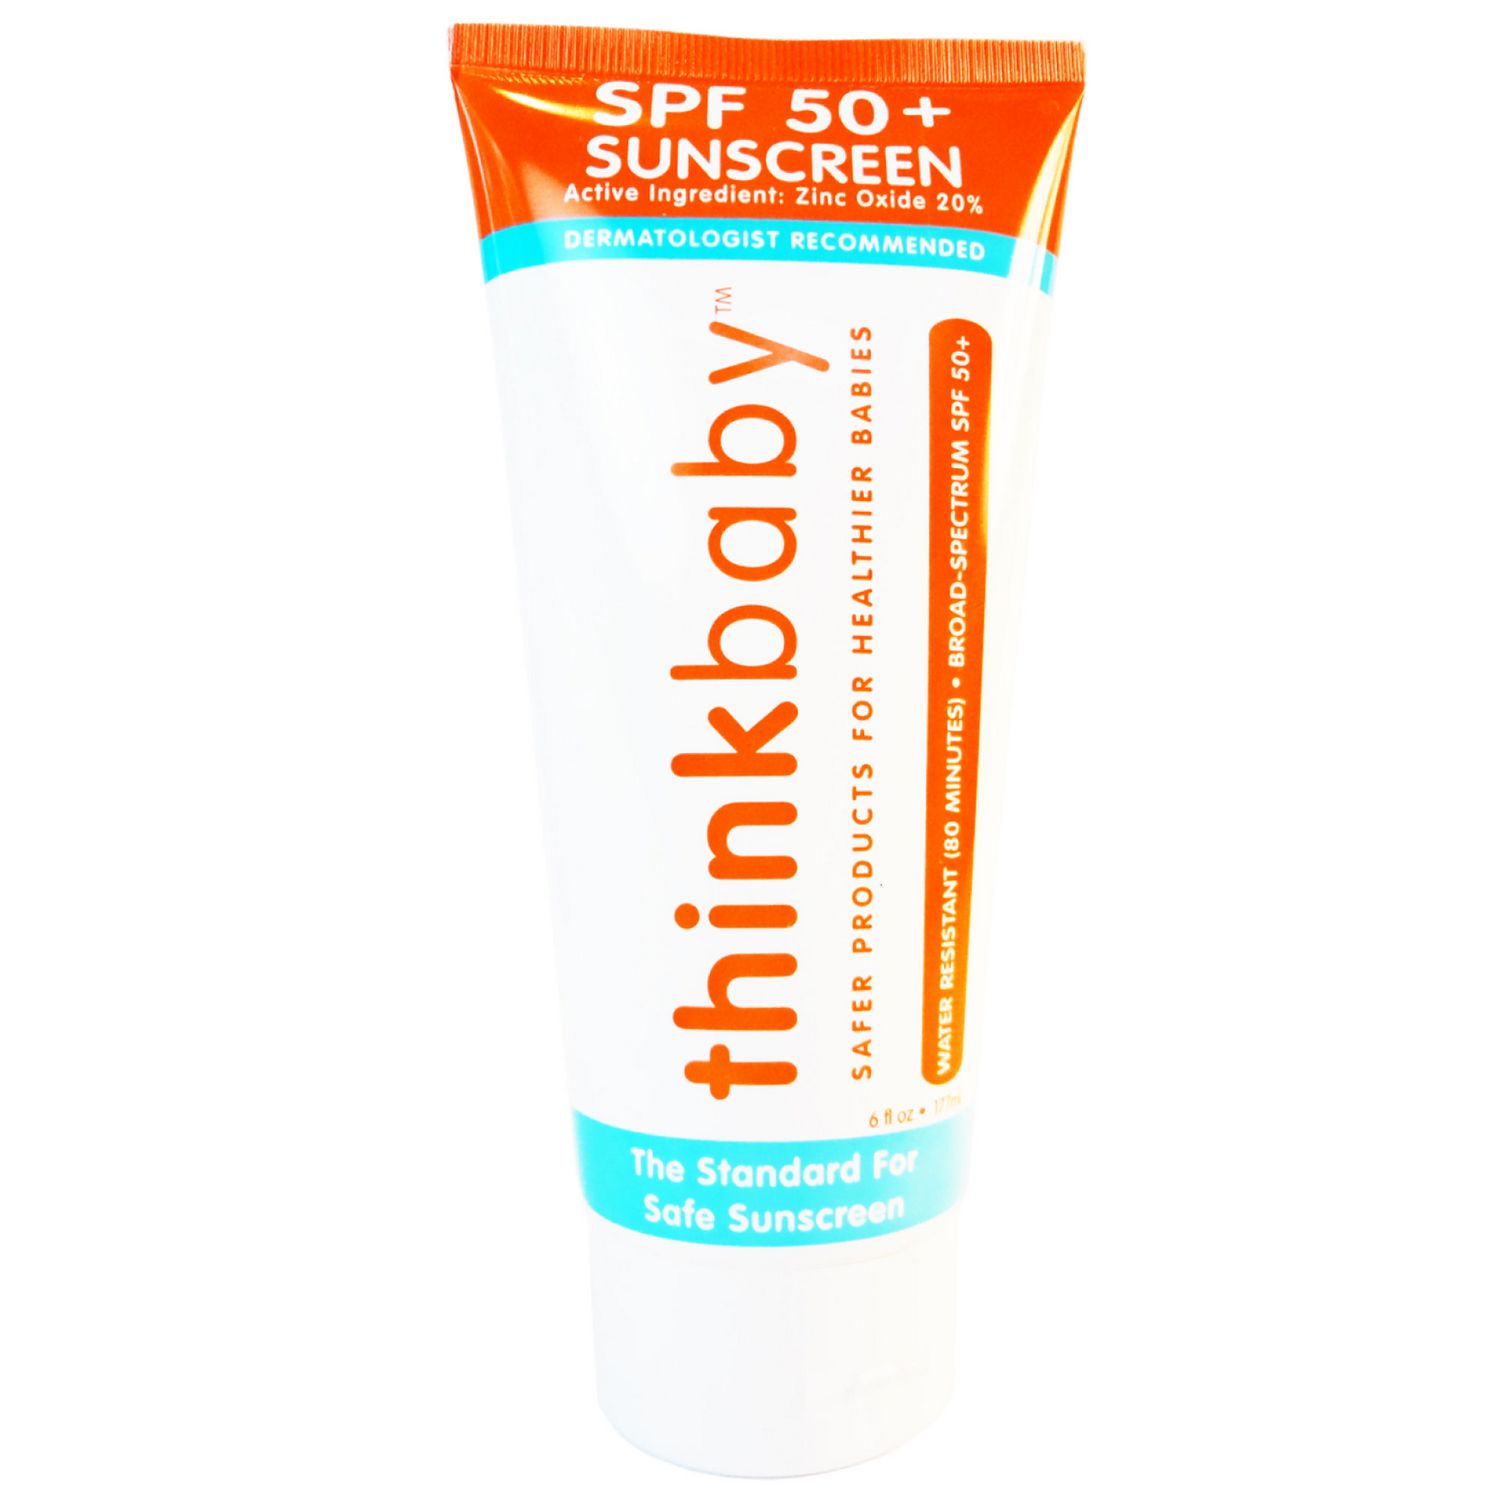 thinkbaby sunscreen rating